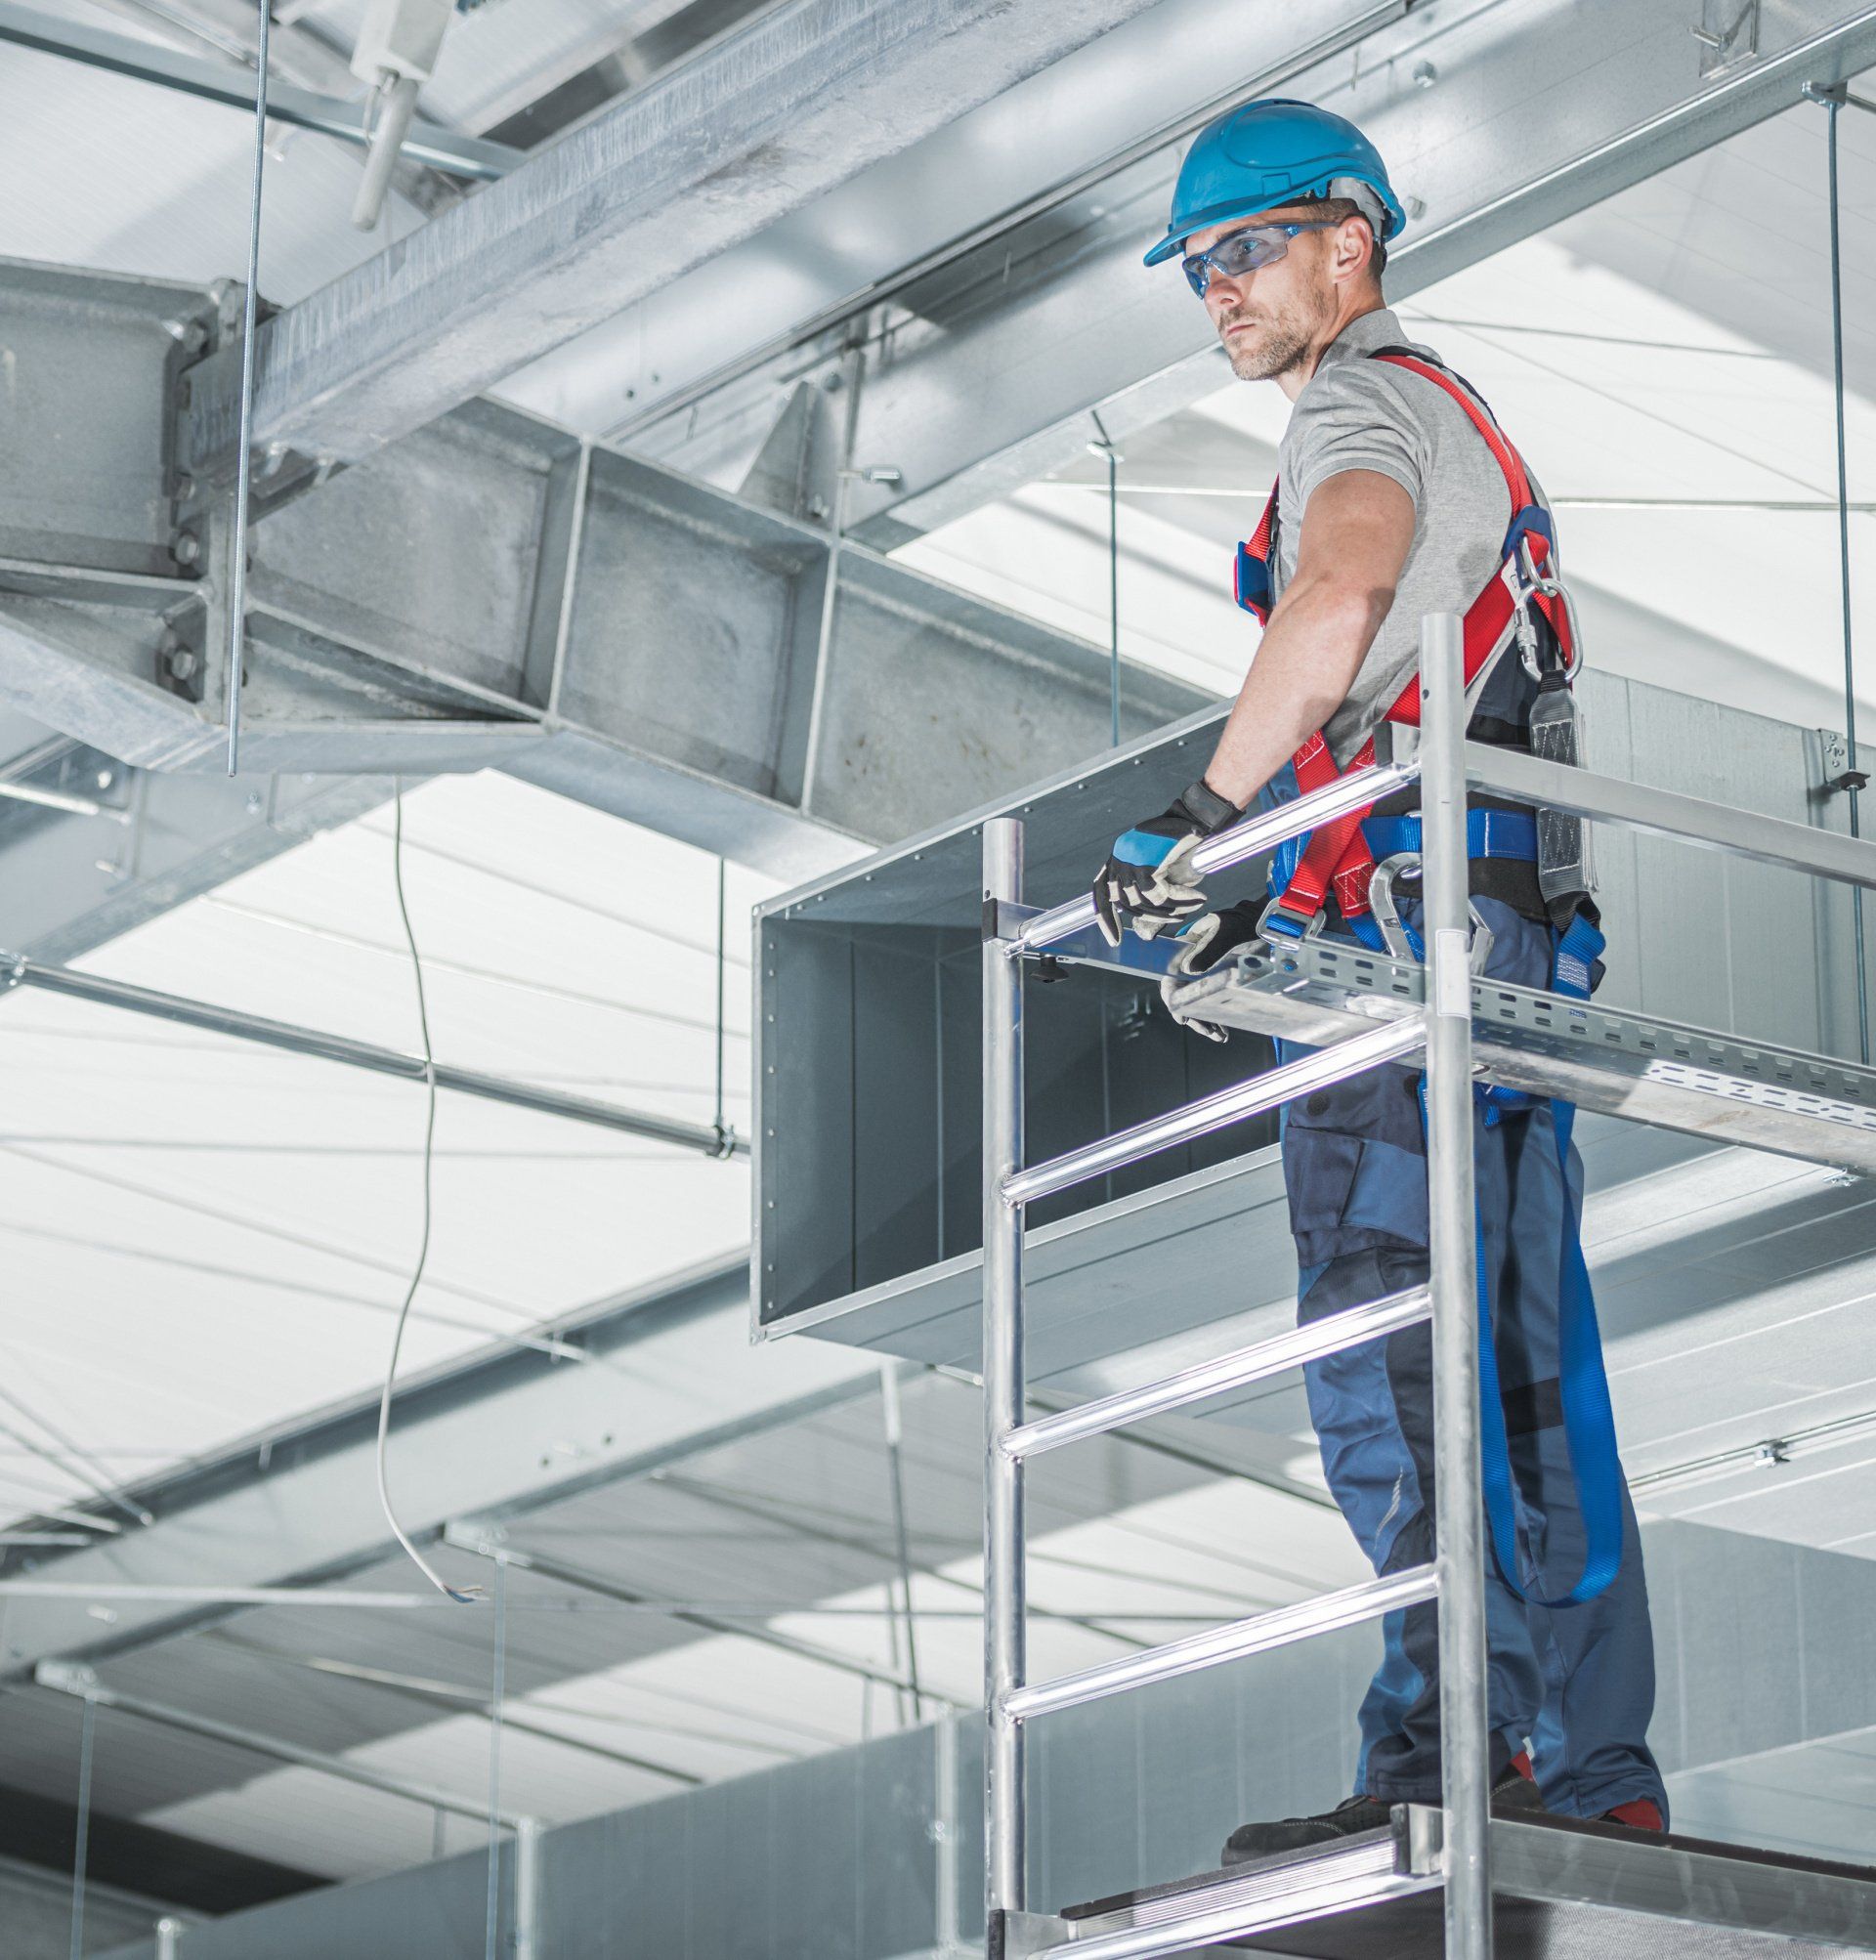 a man wearing a blue hard hat stands on a ladder repairing an HVAC system